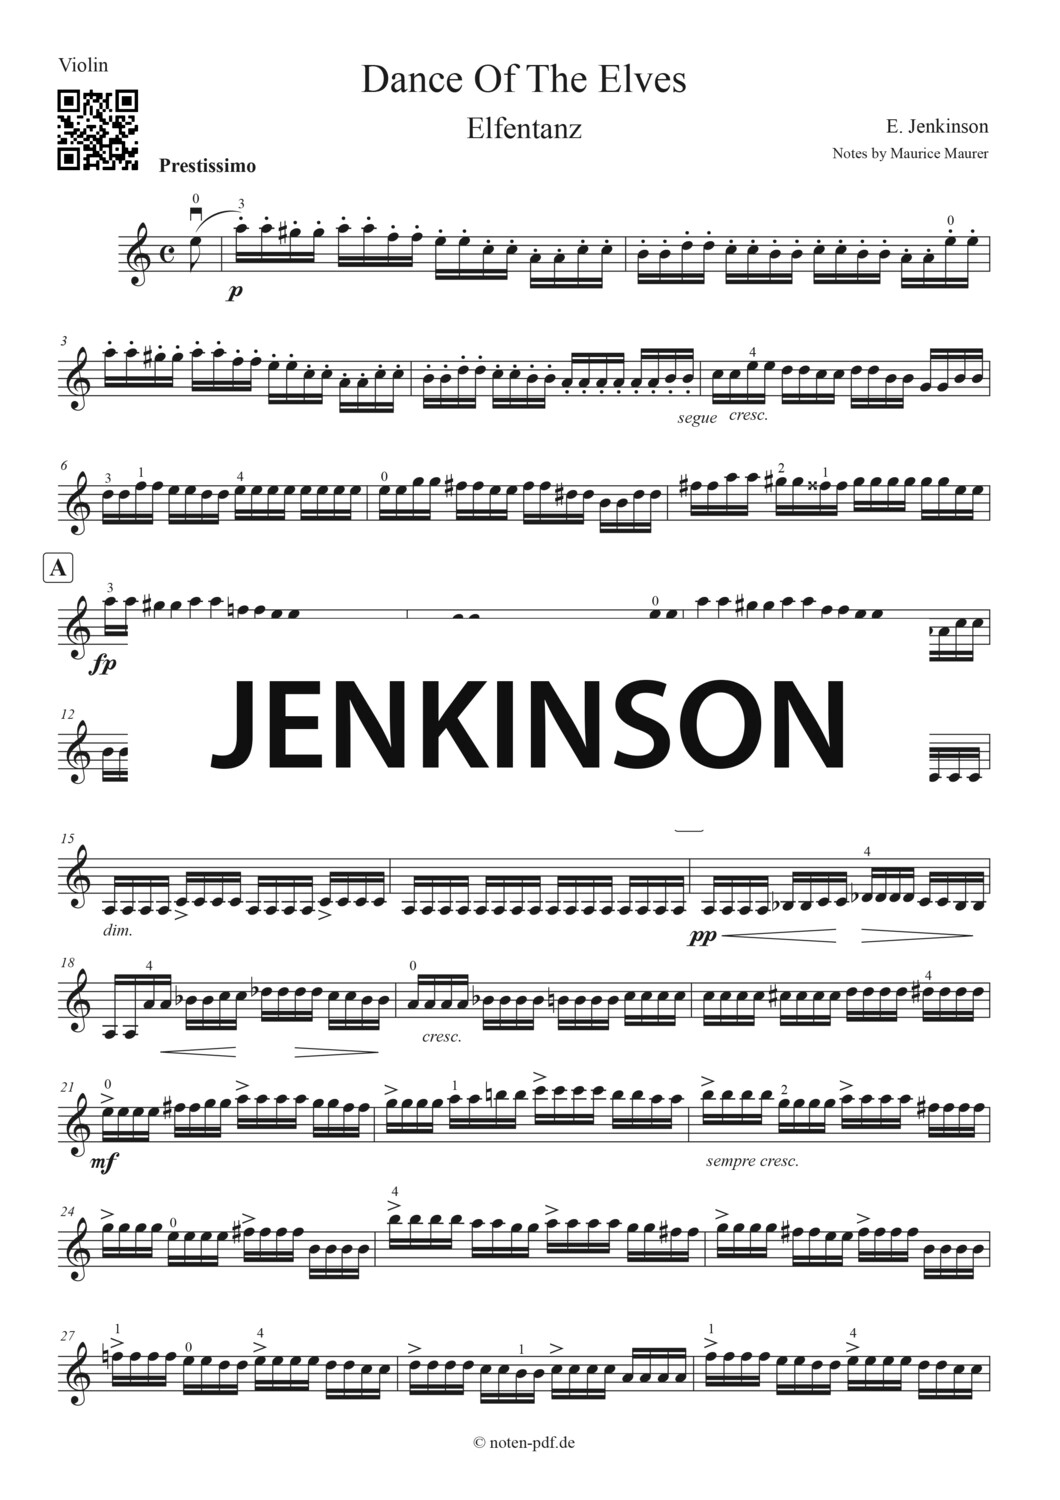 Jenkinson: Elfentanz (Danse des Sylphes)